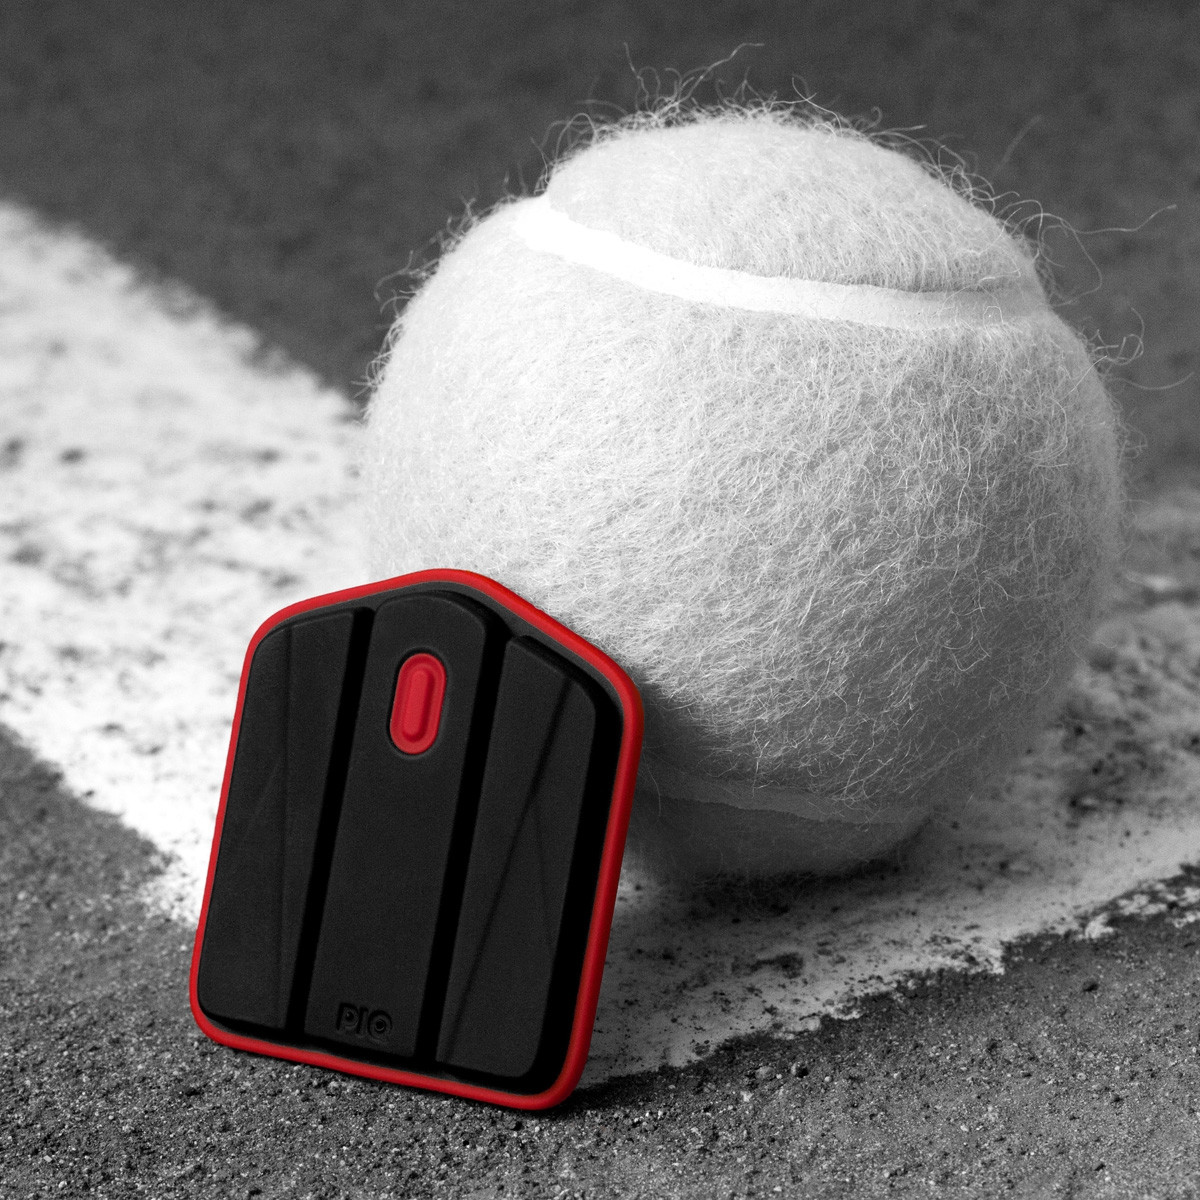 Piq Sensor Multideportivo Inteligente Con Accesorio Para Tenis